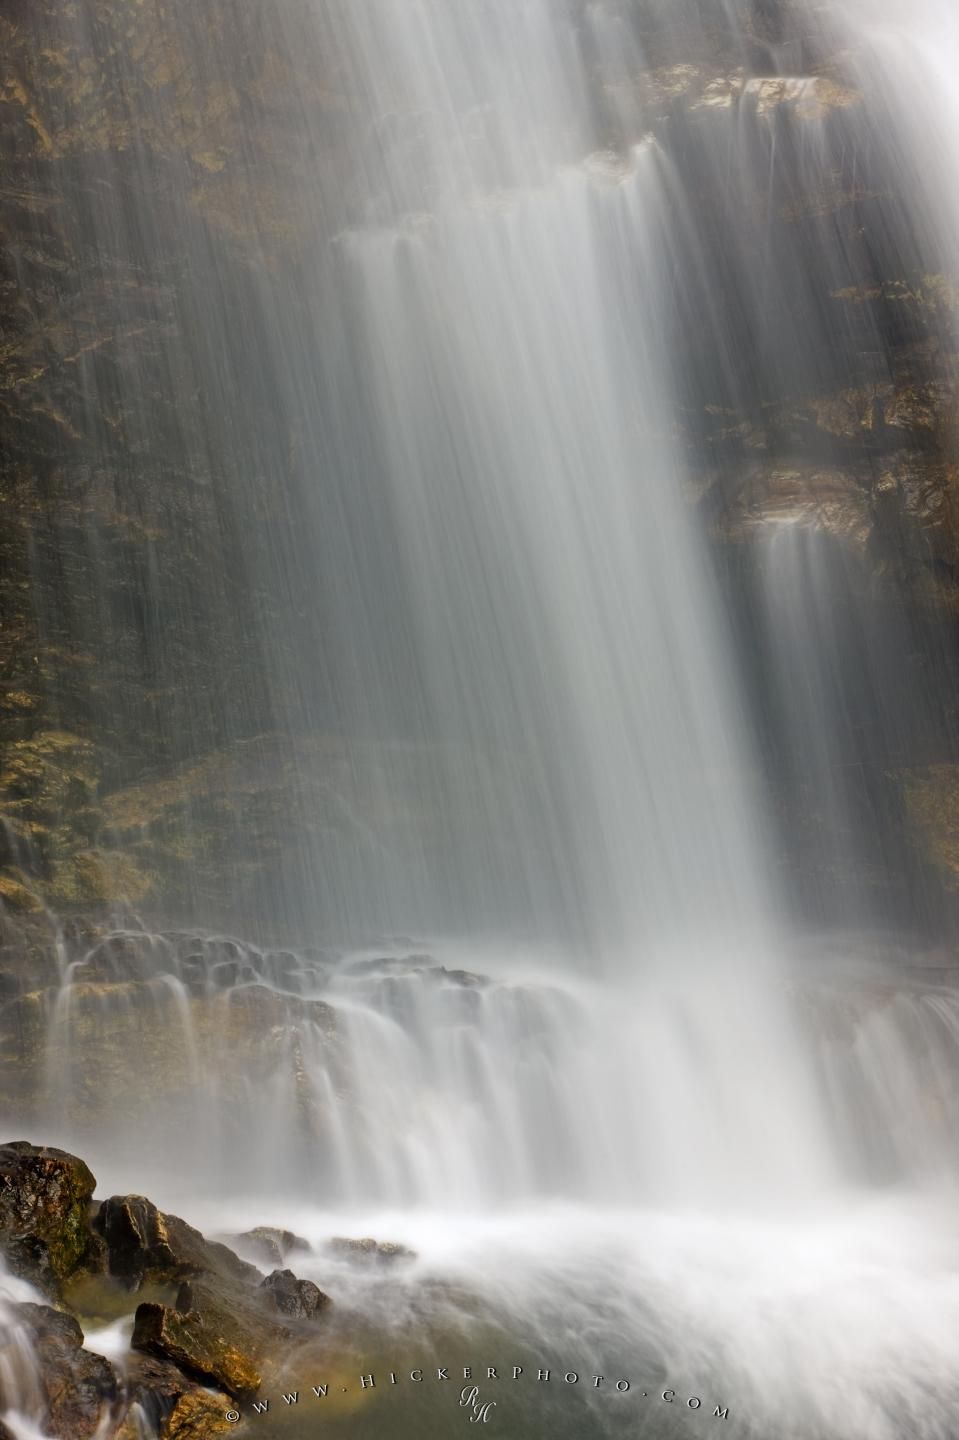 Free wallpaper background: Flowing Water Waterfall Cascades